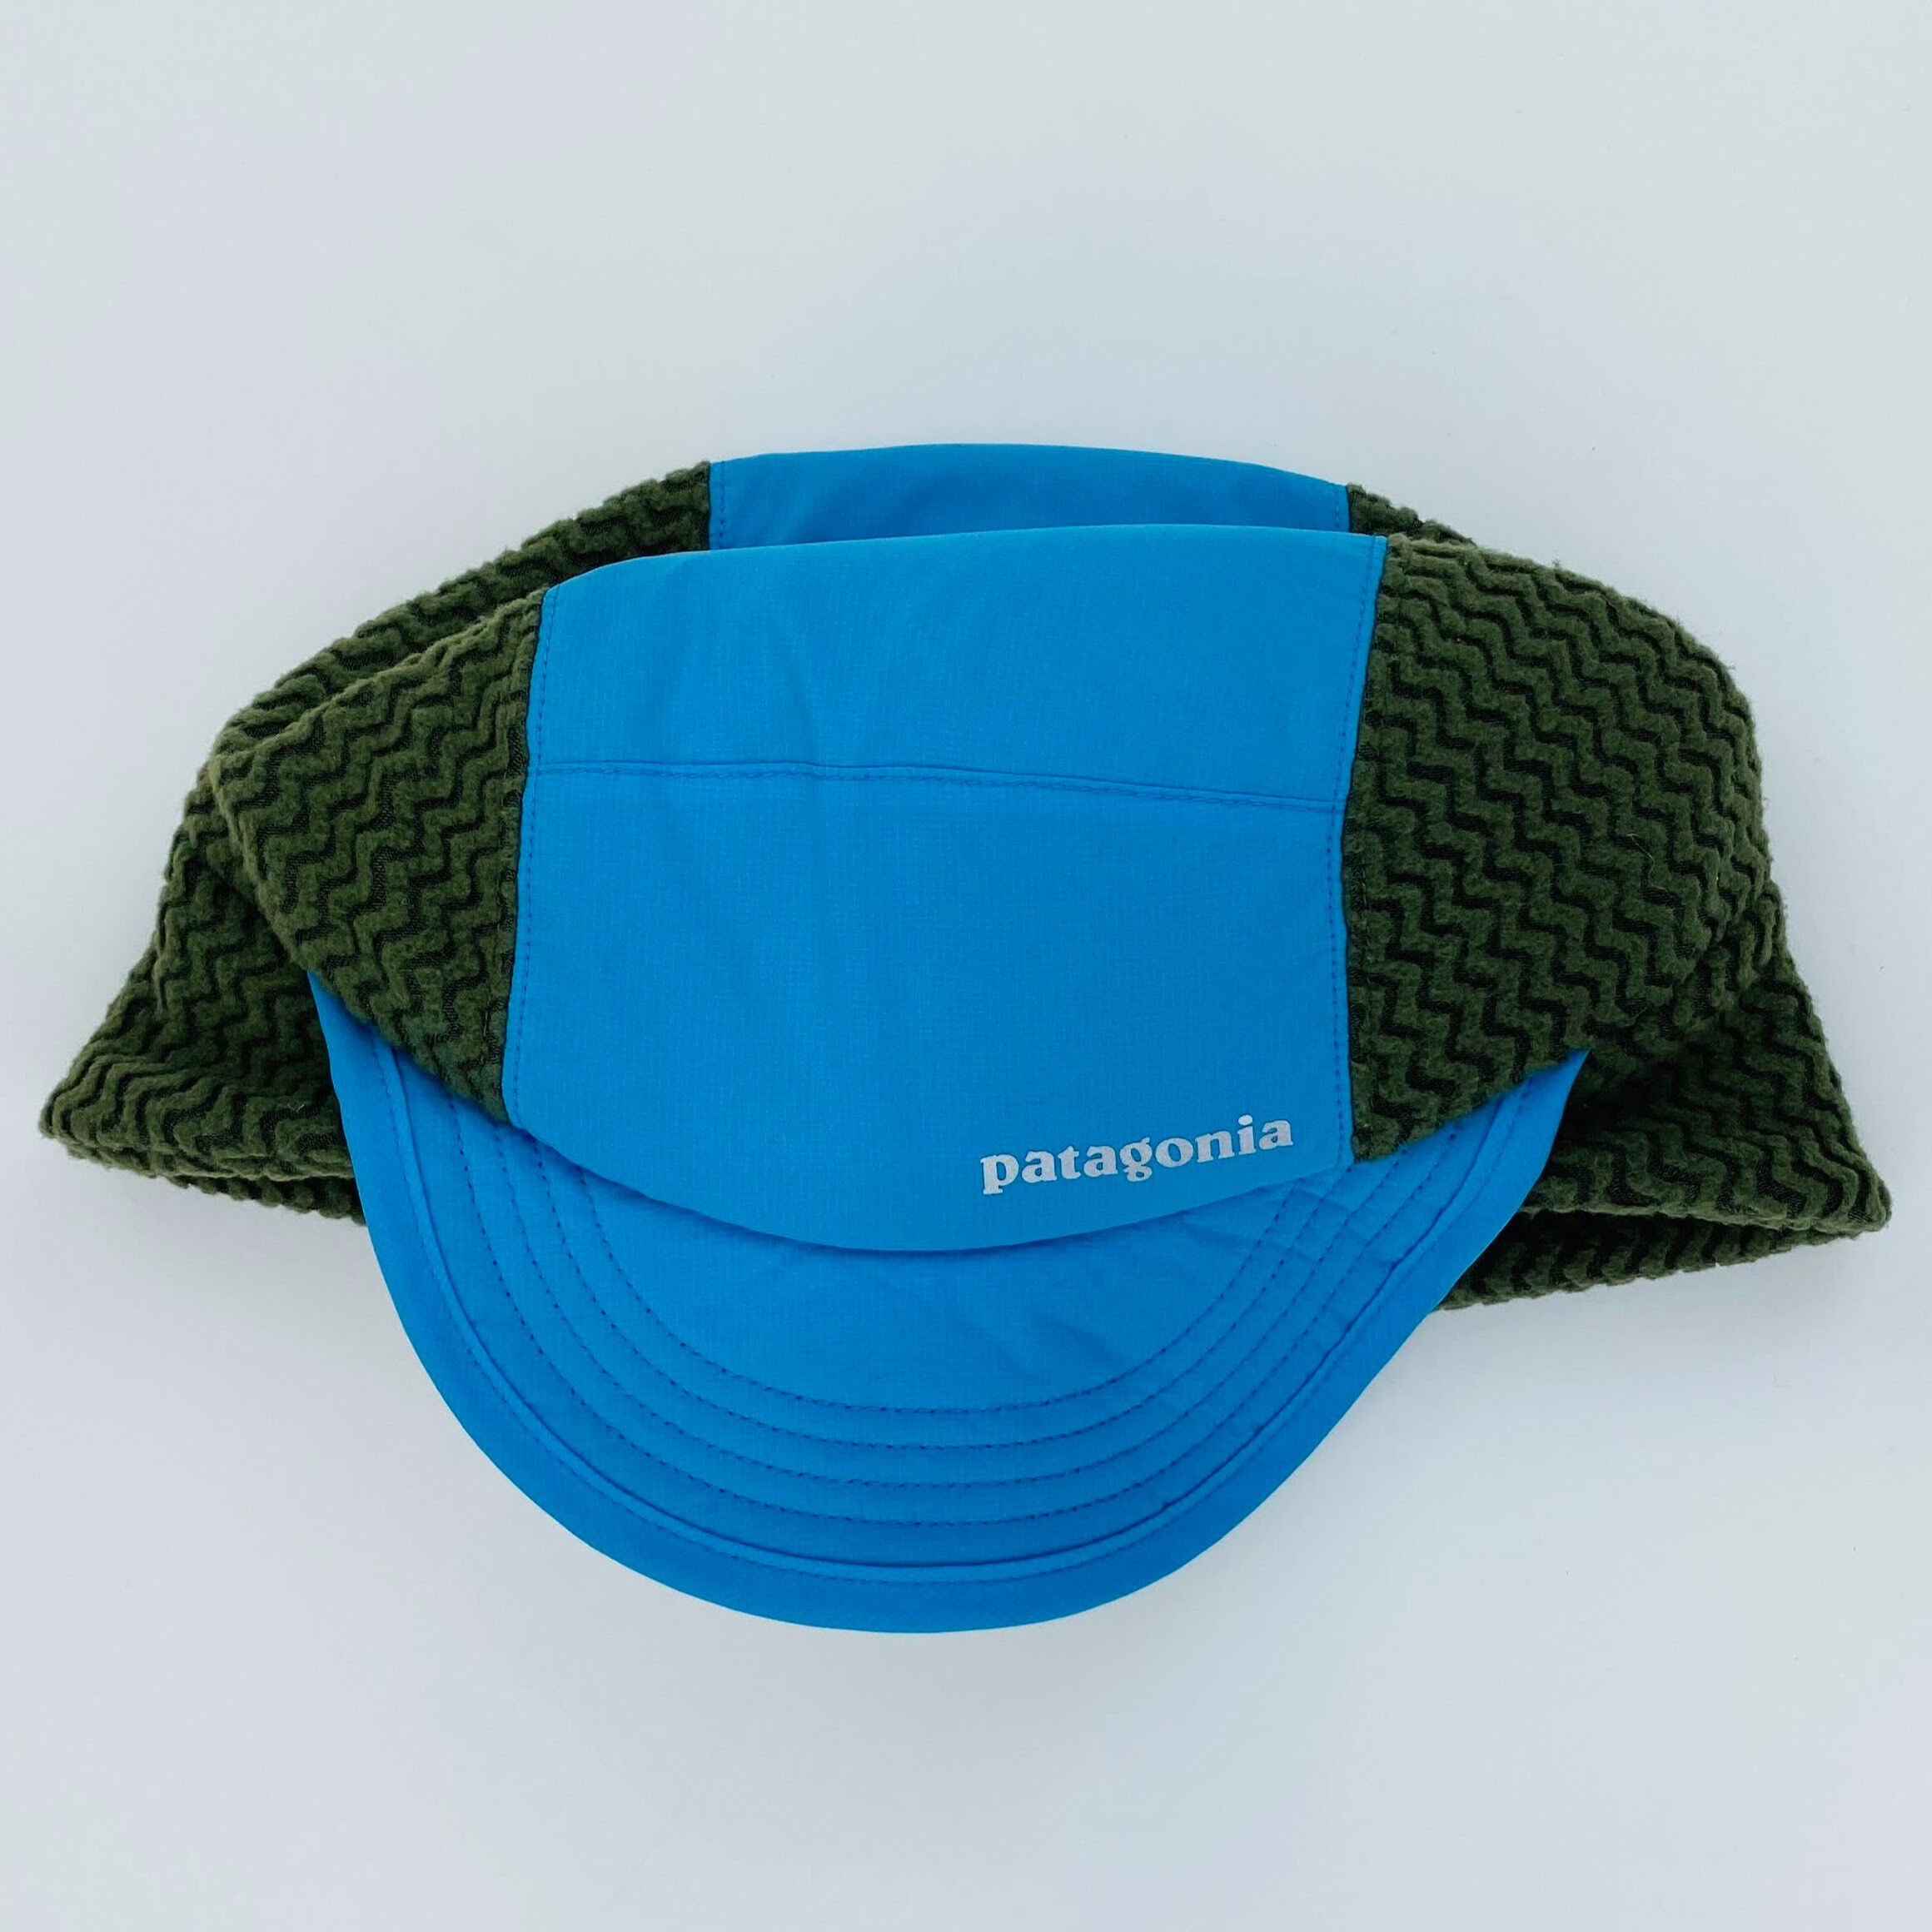 Patagonia Winter Duckbill Cap - Cappellino di seconda mano - Blu - Taglia unica | Hardloop